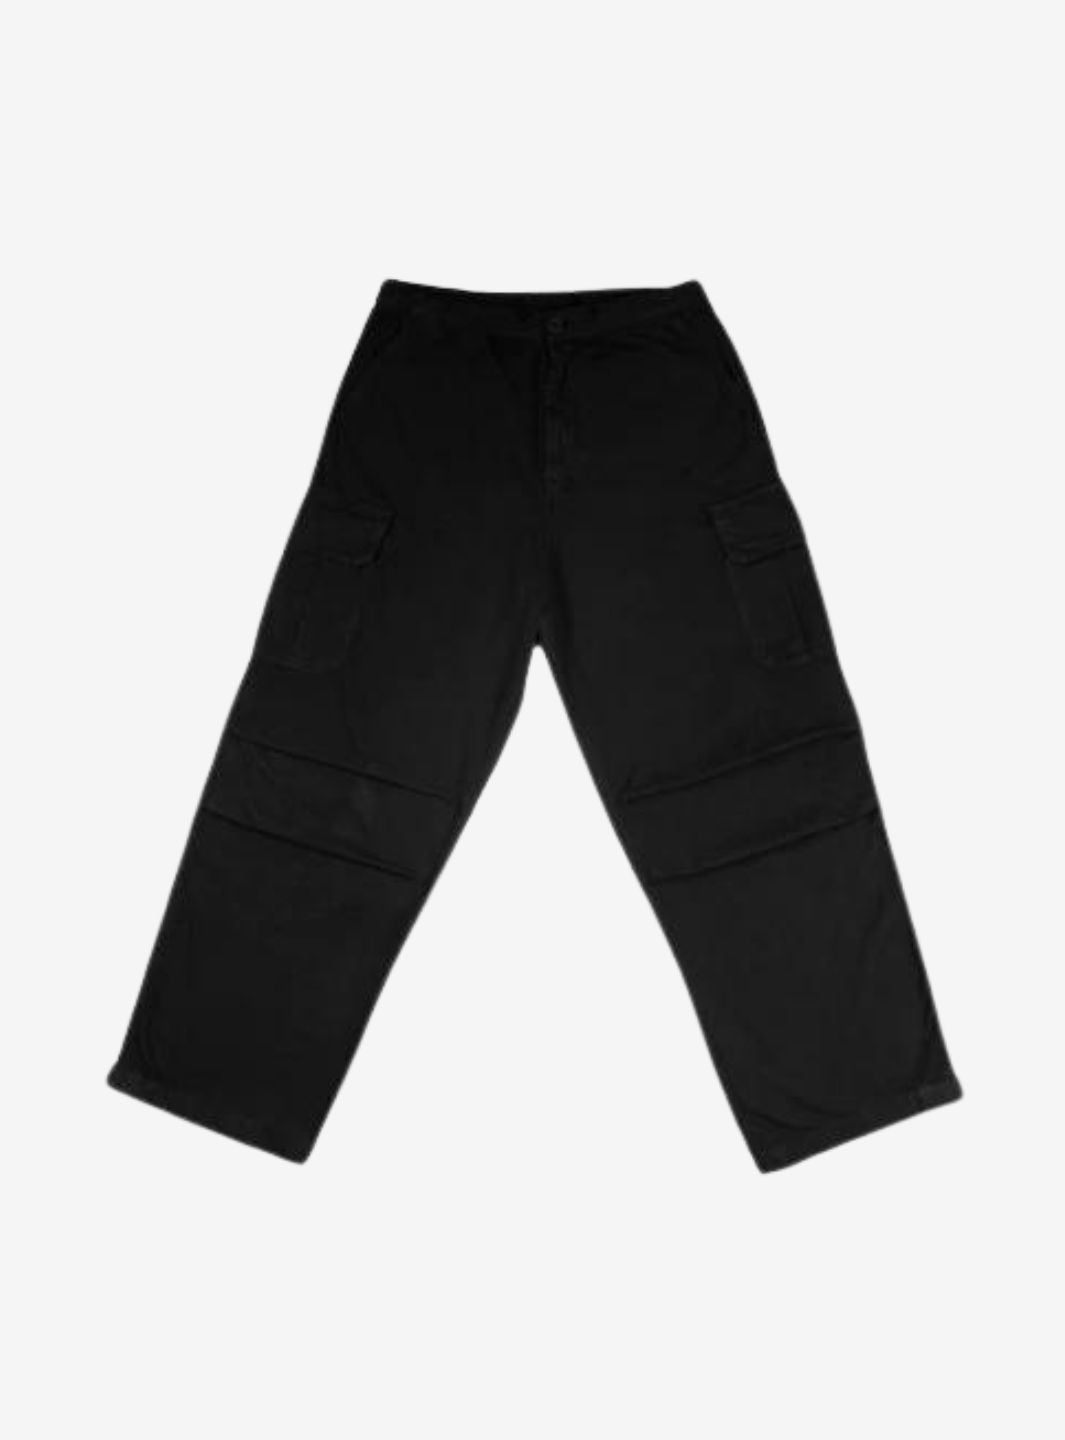 Garment Workshop Parachute Pants Black | ResellZone